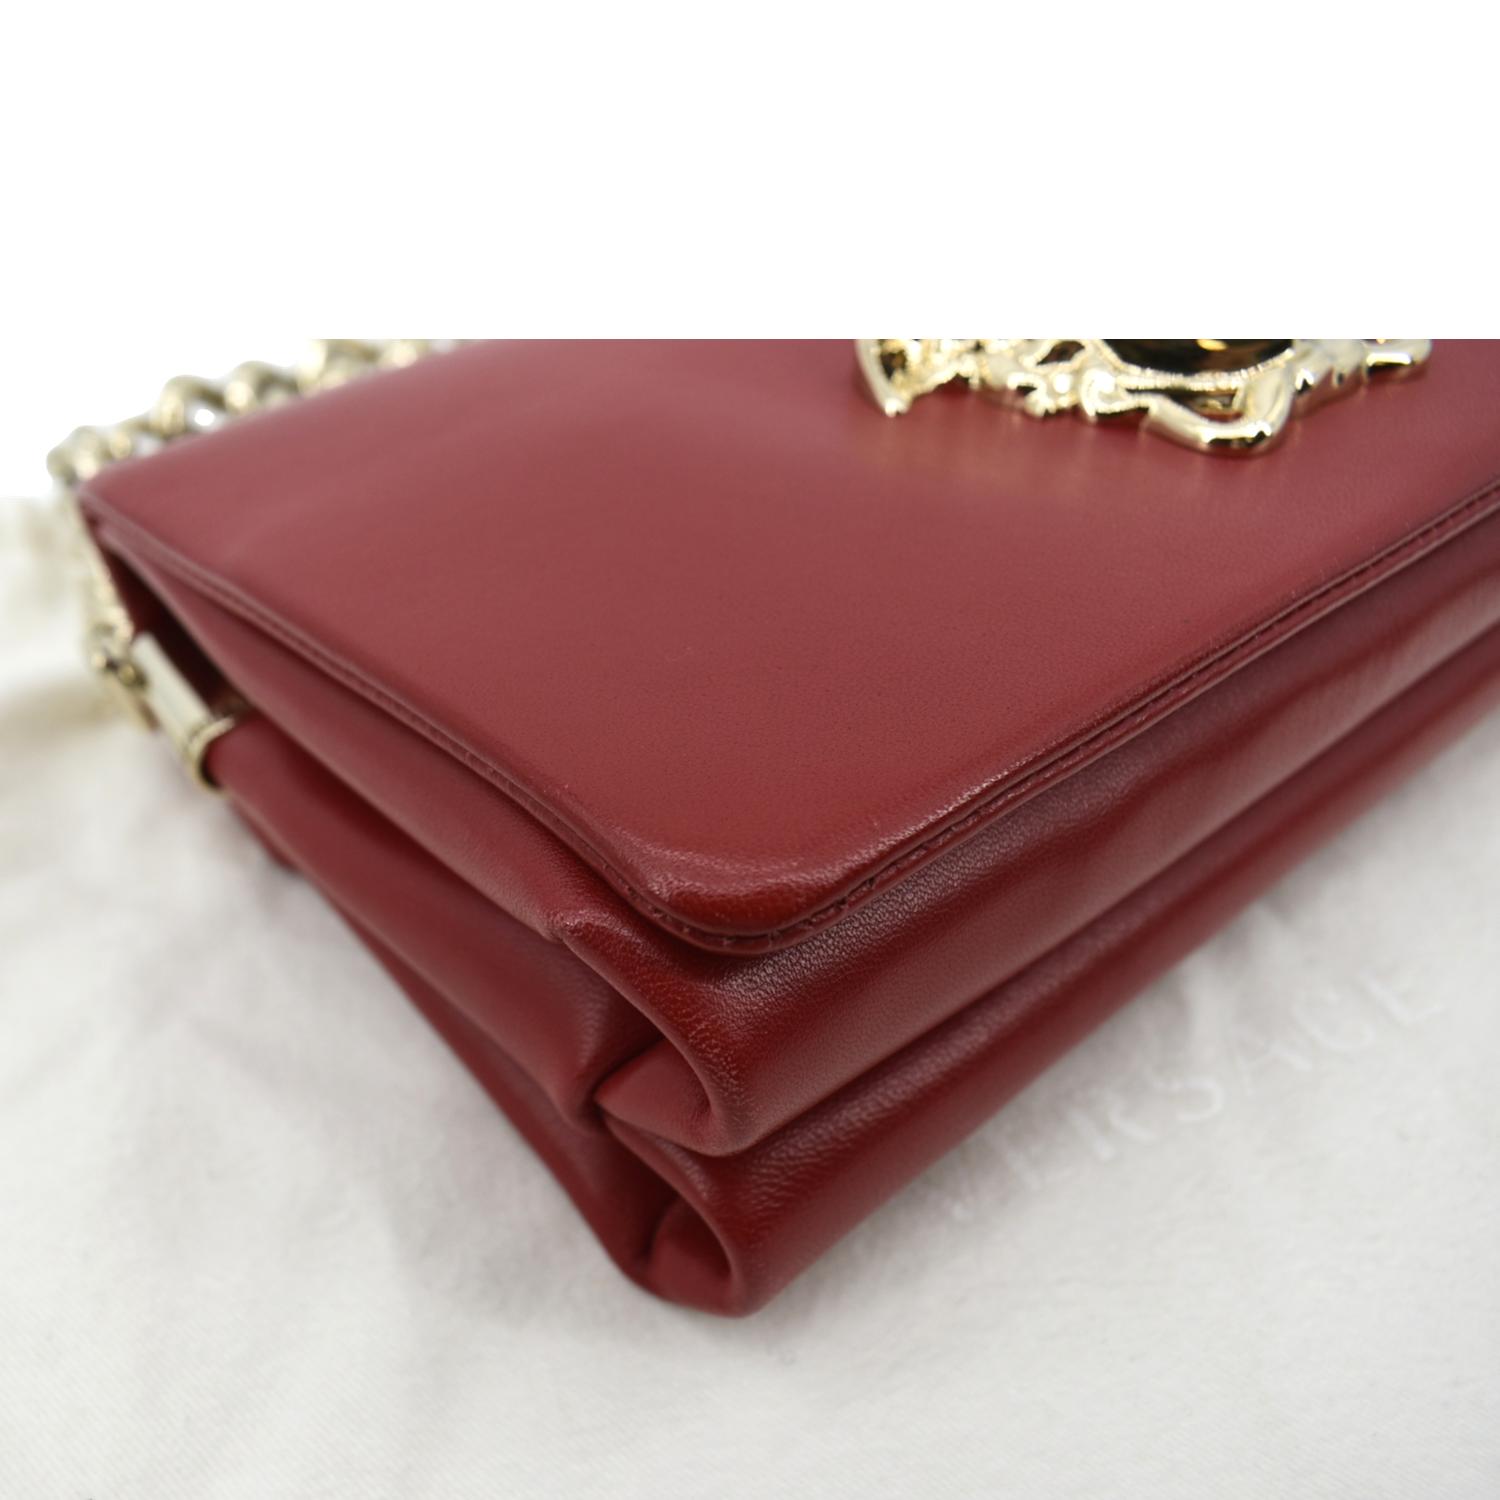 Versace Medusa Calfskin Leather Chain Clutch Bag Red